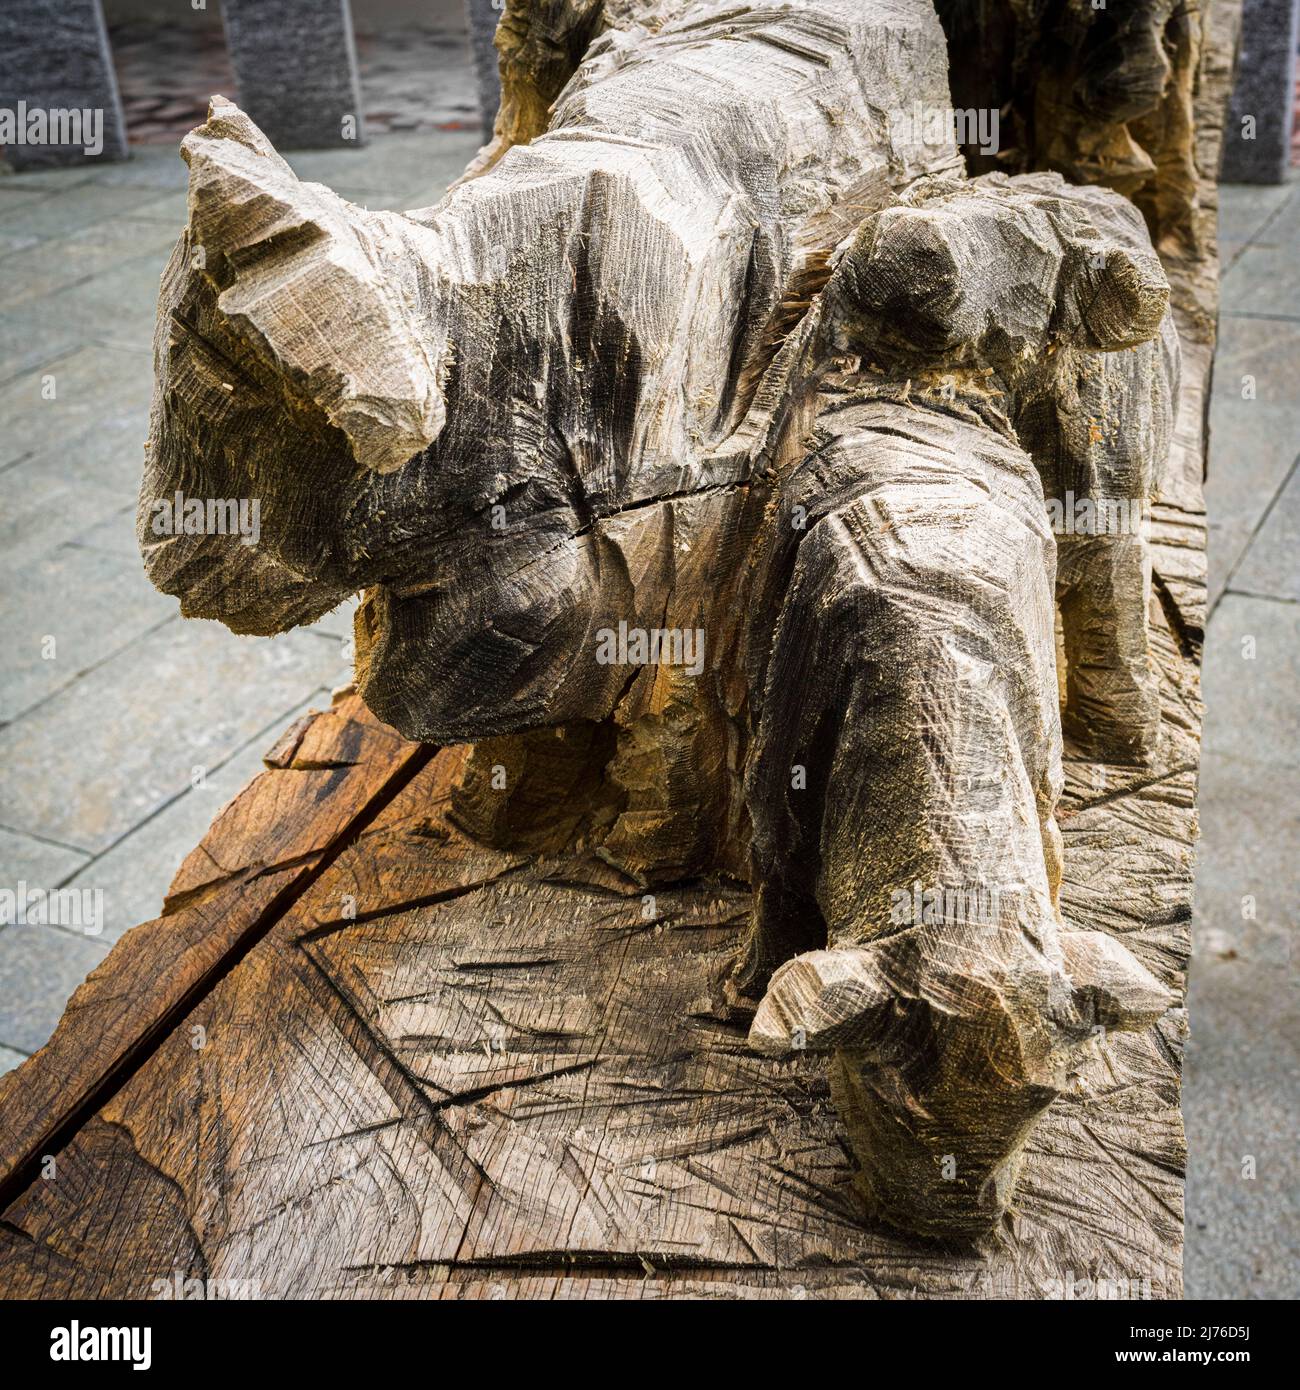 Wooden sculpture on the promenade in Brienz Stock Photo